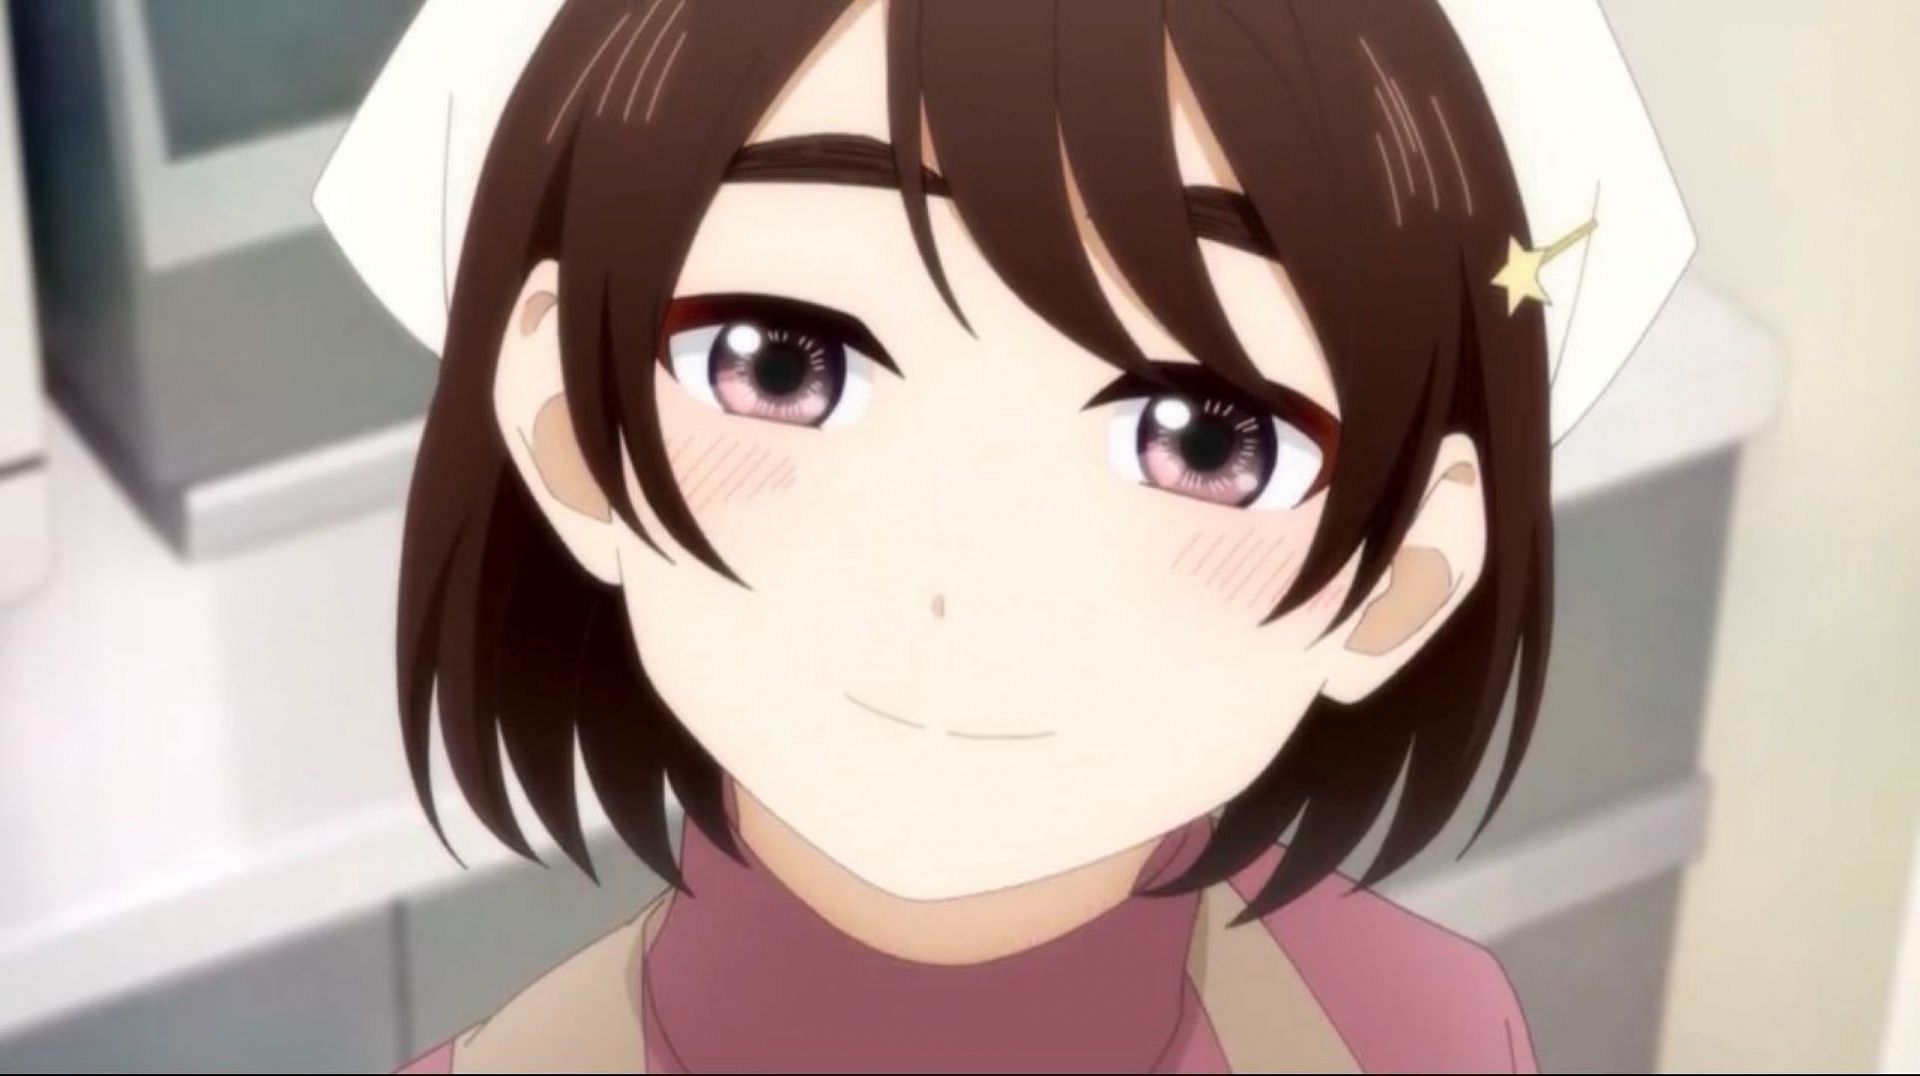 Hinase Hotaru, as seen in the anime (Image via East Fish Studios)